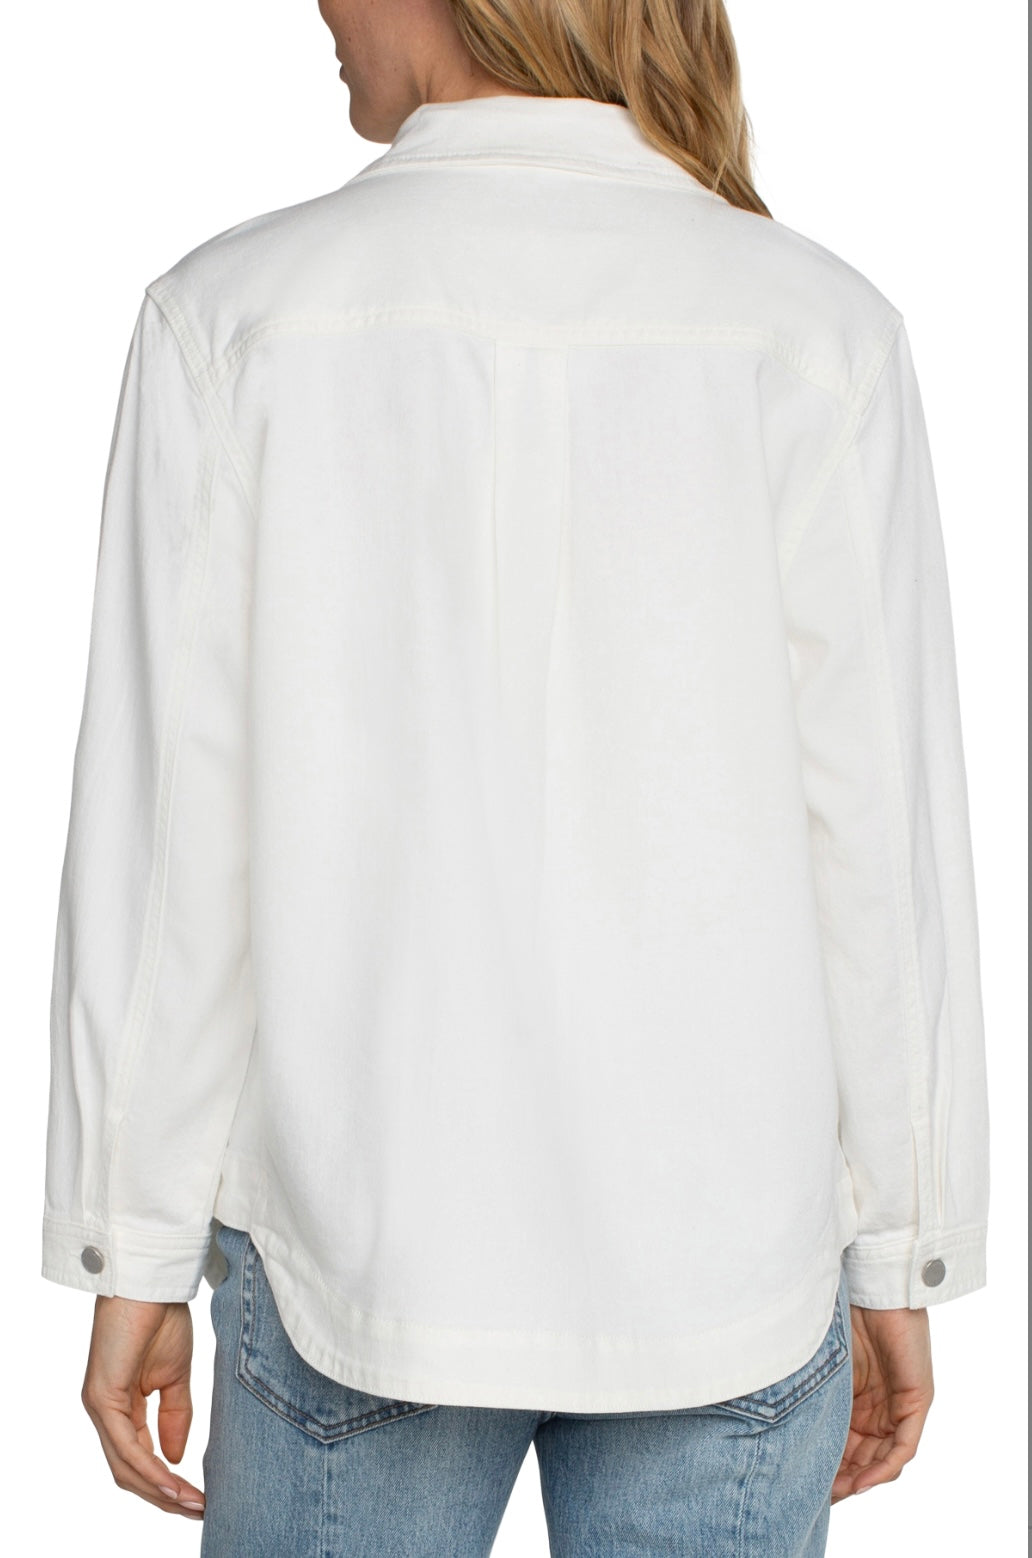 Liverpool White Shirt Jacket